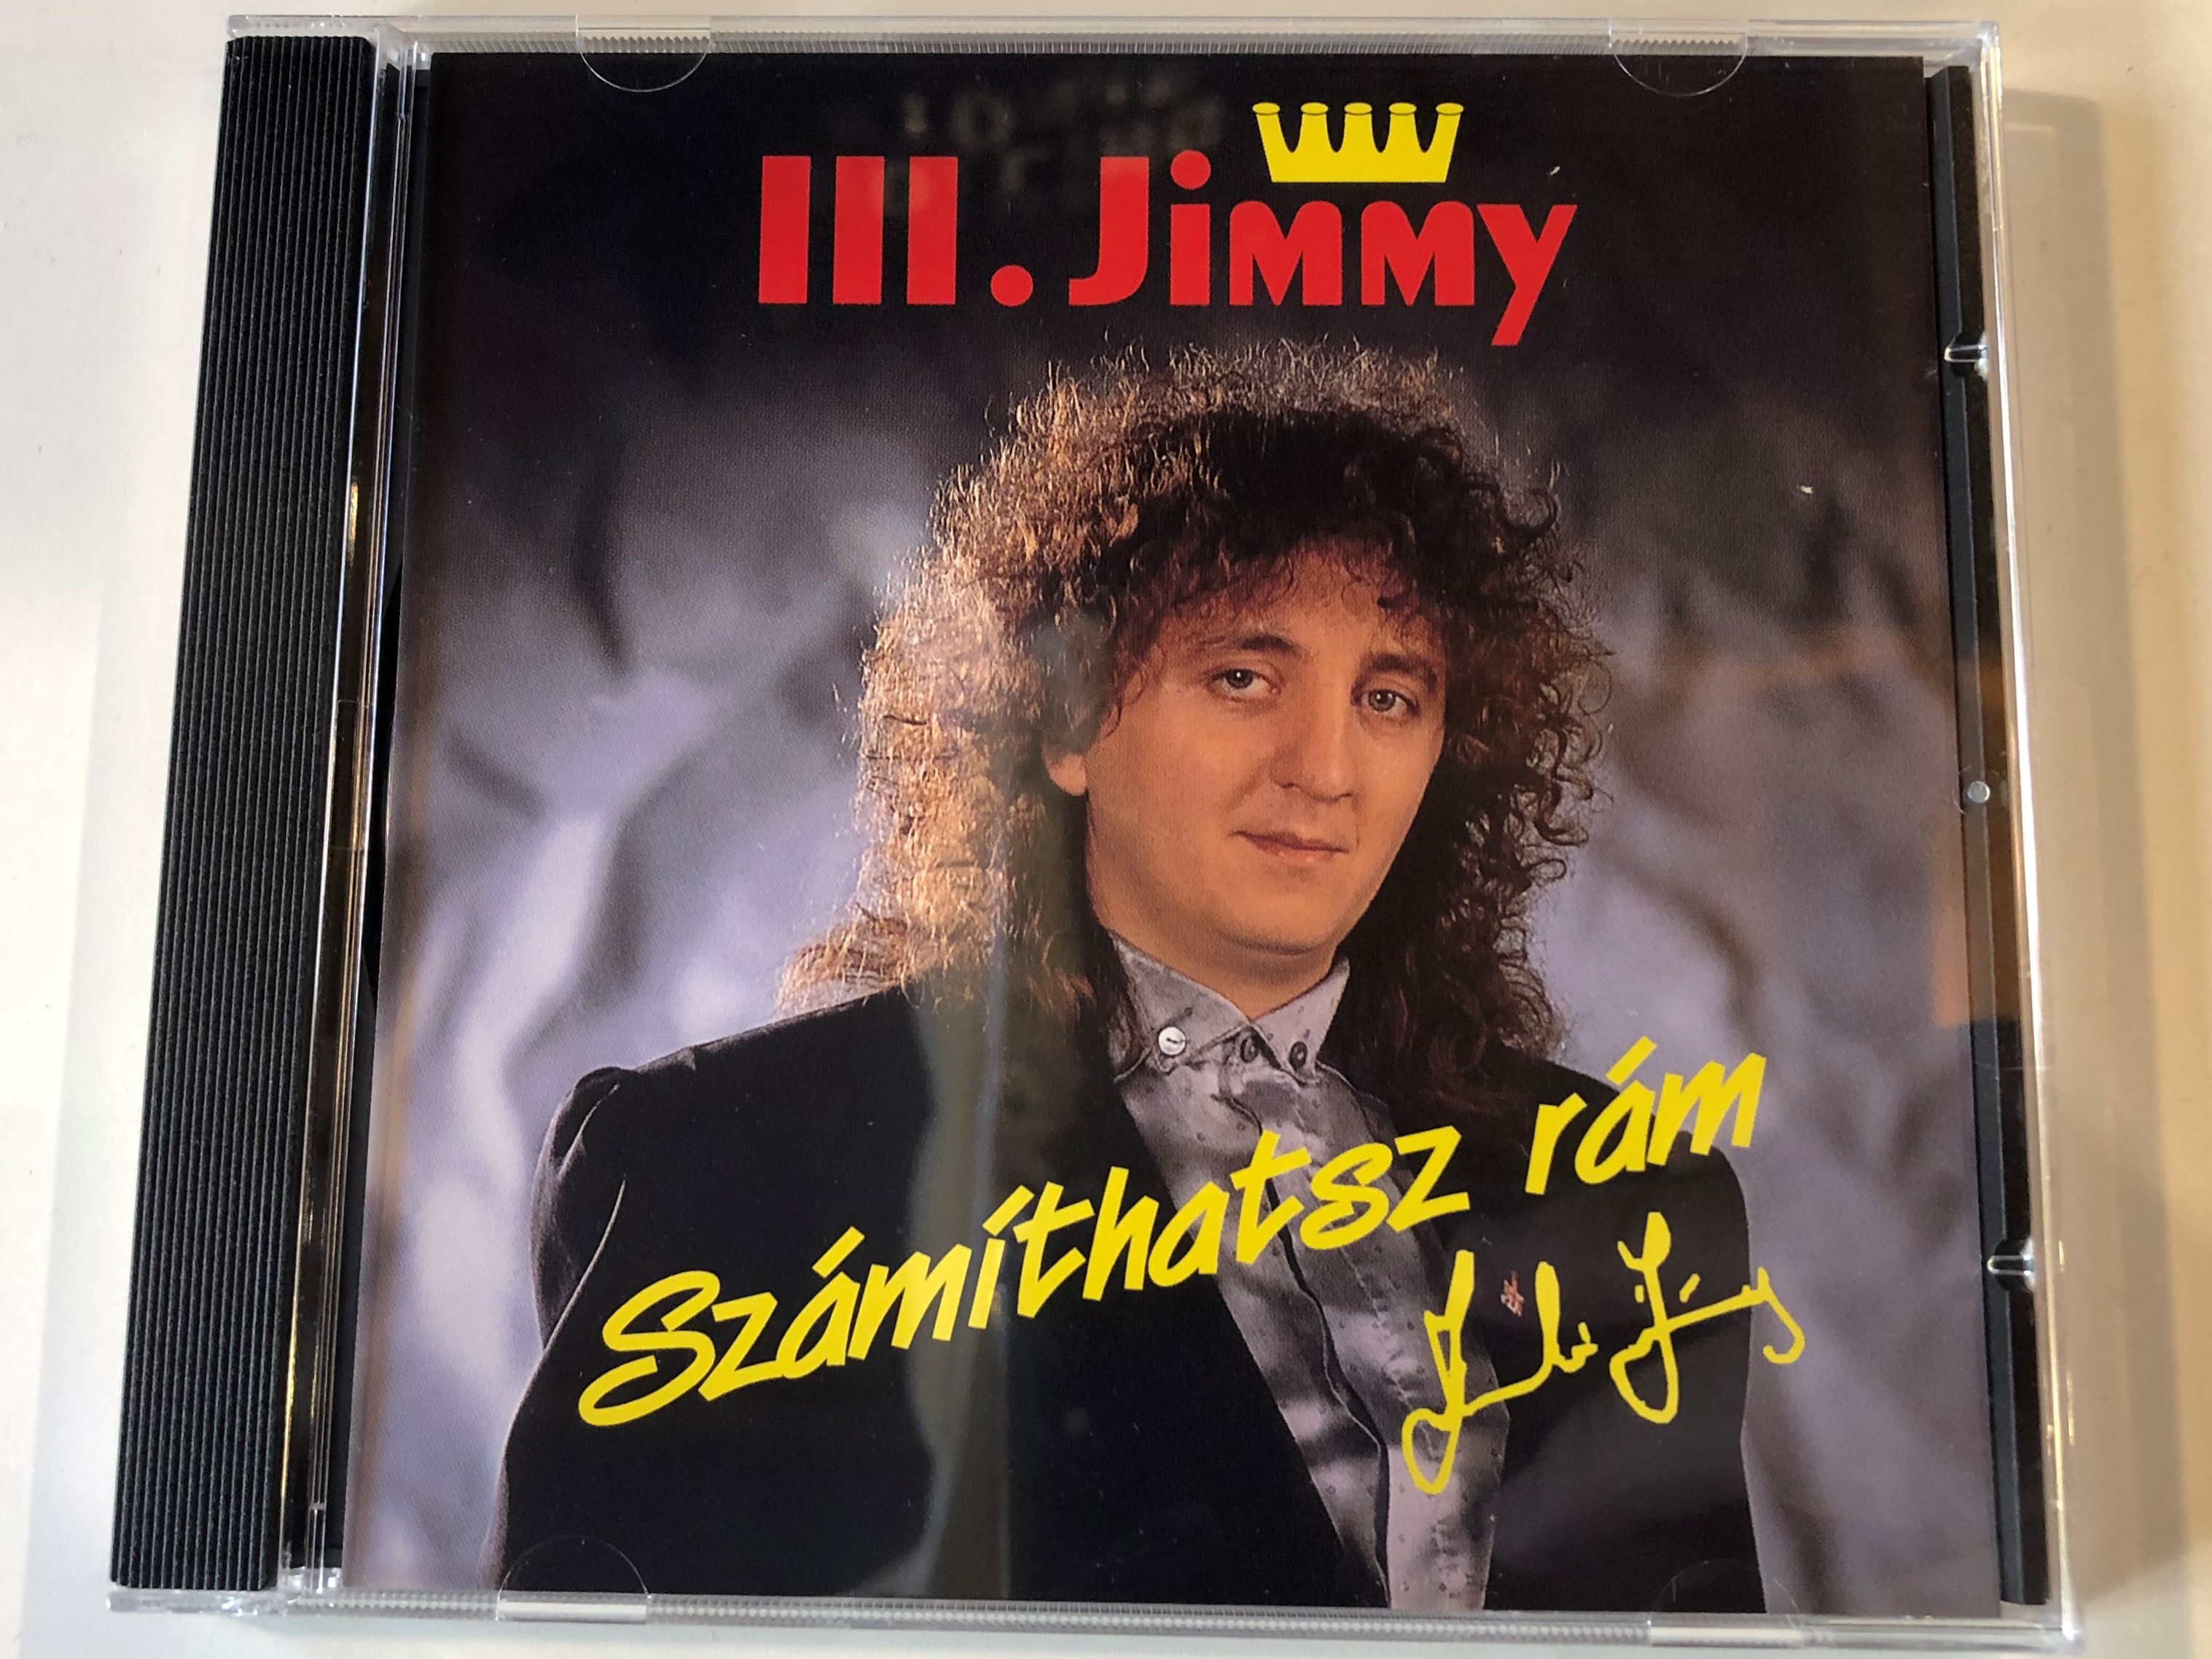 iii.-jimmy-sz-m-thatsz-r-m-magneoton-audio-cd-1999-3984-26107-2-1-.jpg